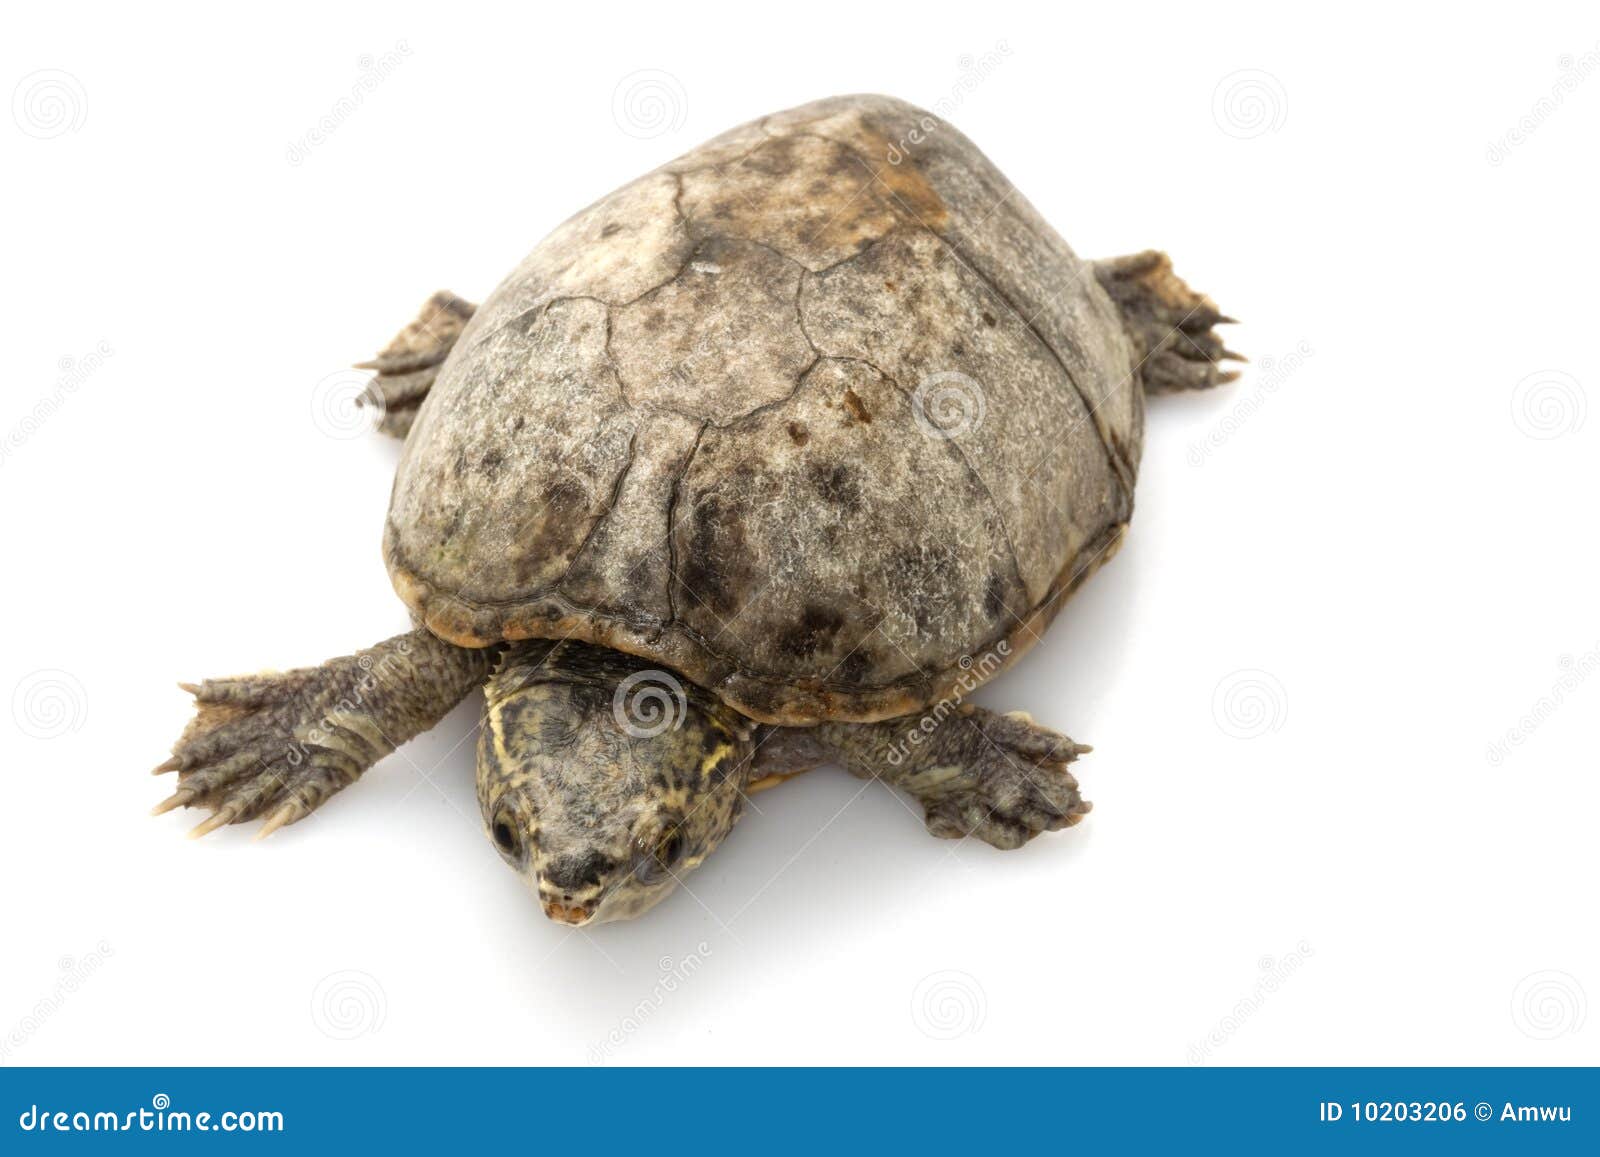 Common Musk Turtle stock photo. Image of slow, background - 10203206